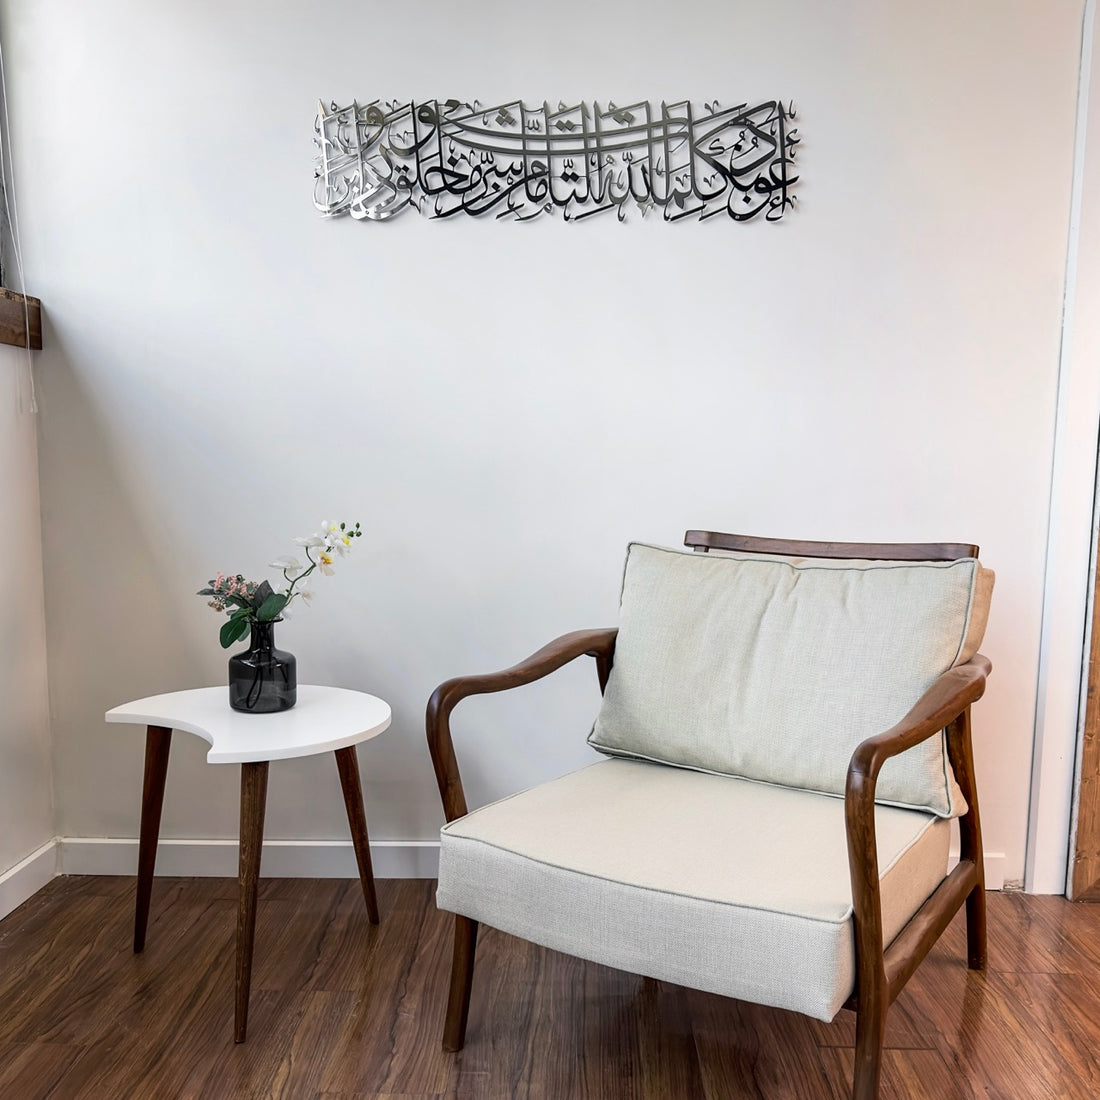 islamic-metal-wall-art-protection-dua-for-evil-eye-islamic-calligraphy-elegant-spiritual-decor-for-homes-shukranislamicart